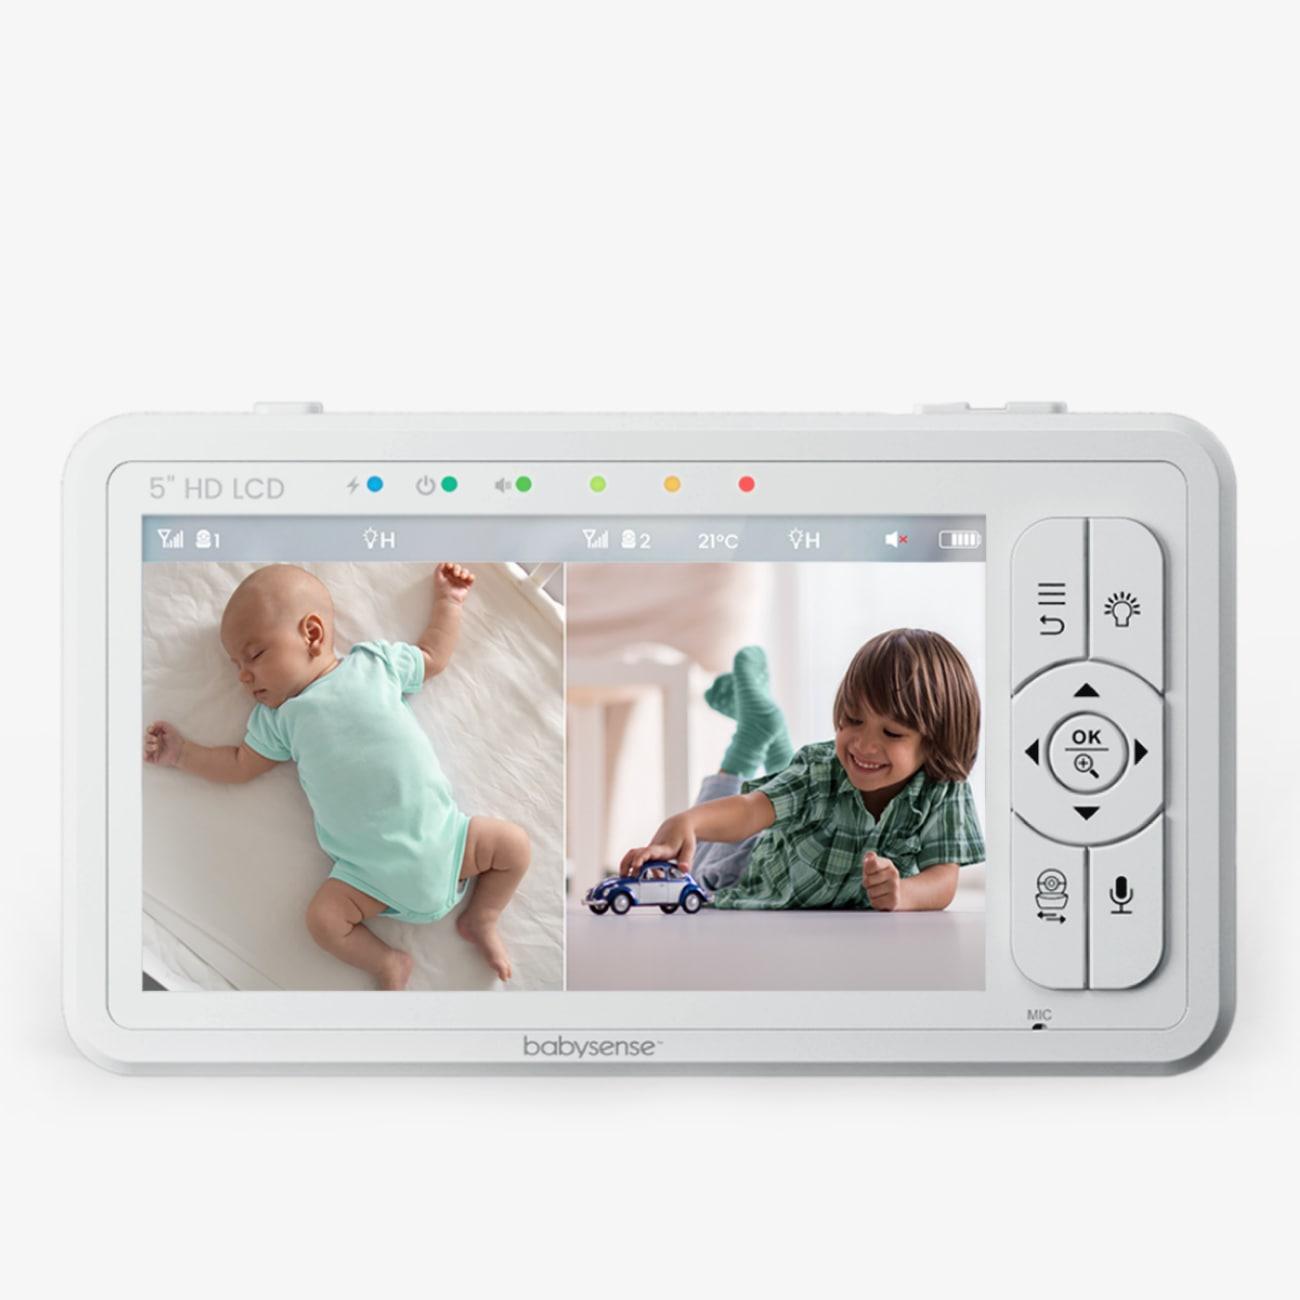  Babysense 5.5” 1080p Full HD Split-Screen Baby Monitor